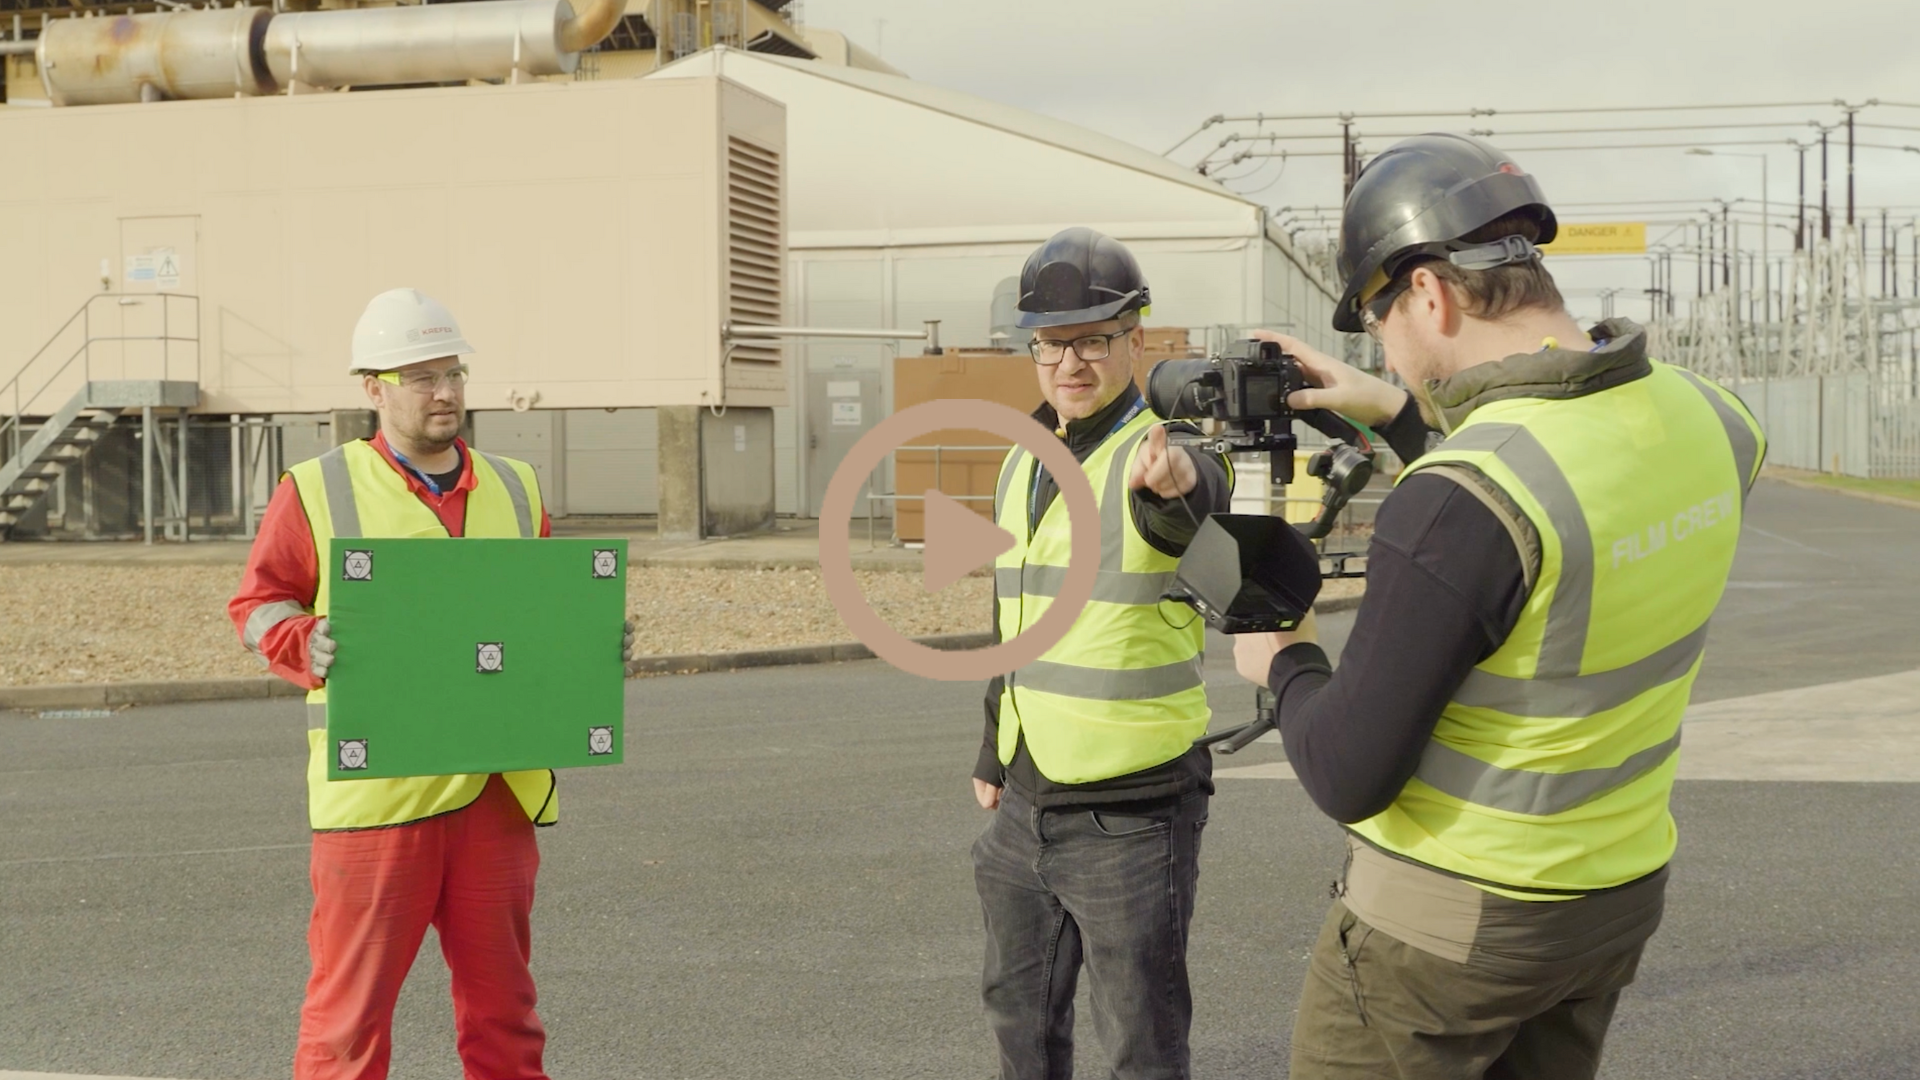 RWE Health & Safety Behind the Scenes Video